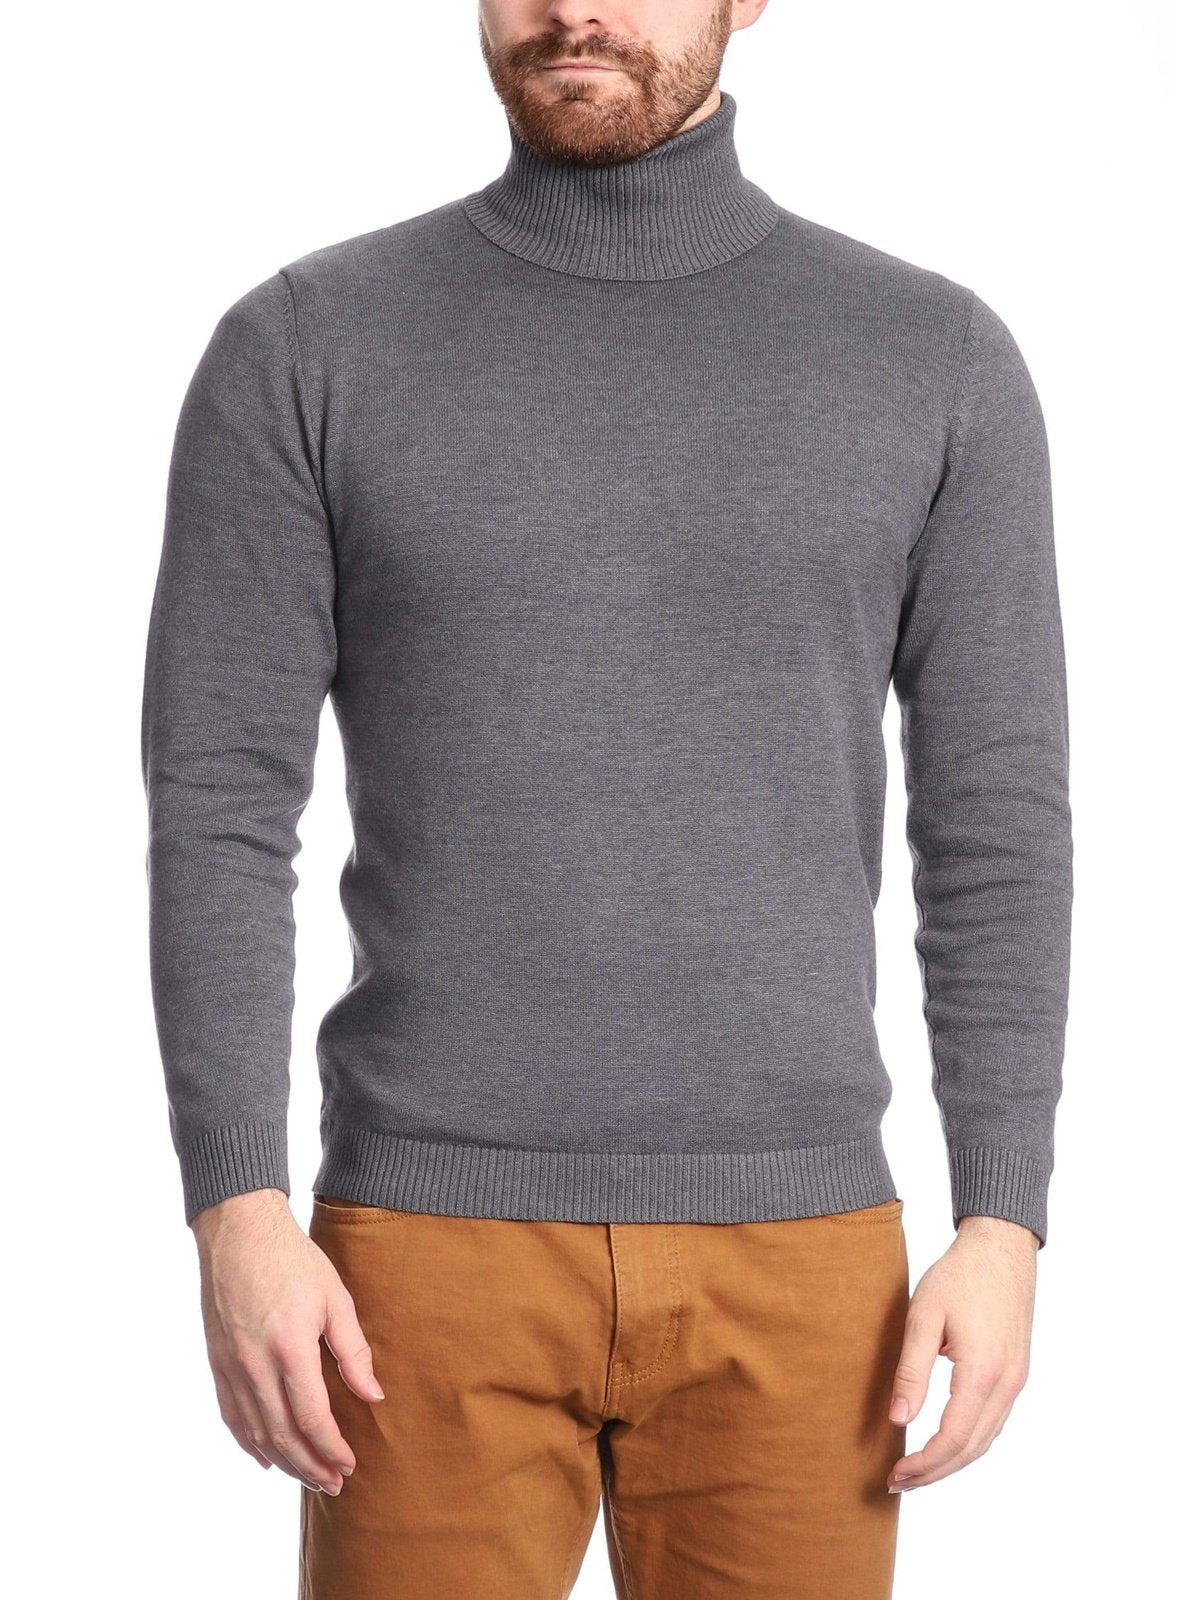 Arthur Black Default Category Migrated Gray / S Arthur Black Men&#39;s Solid Gray Pullover Cotton Blend Turtleneck Sweater Shirt